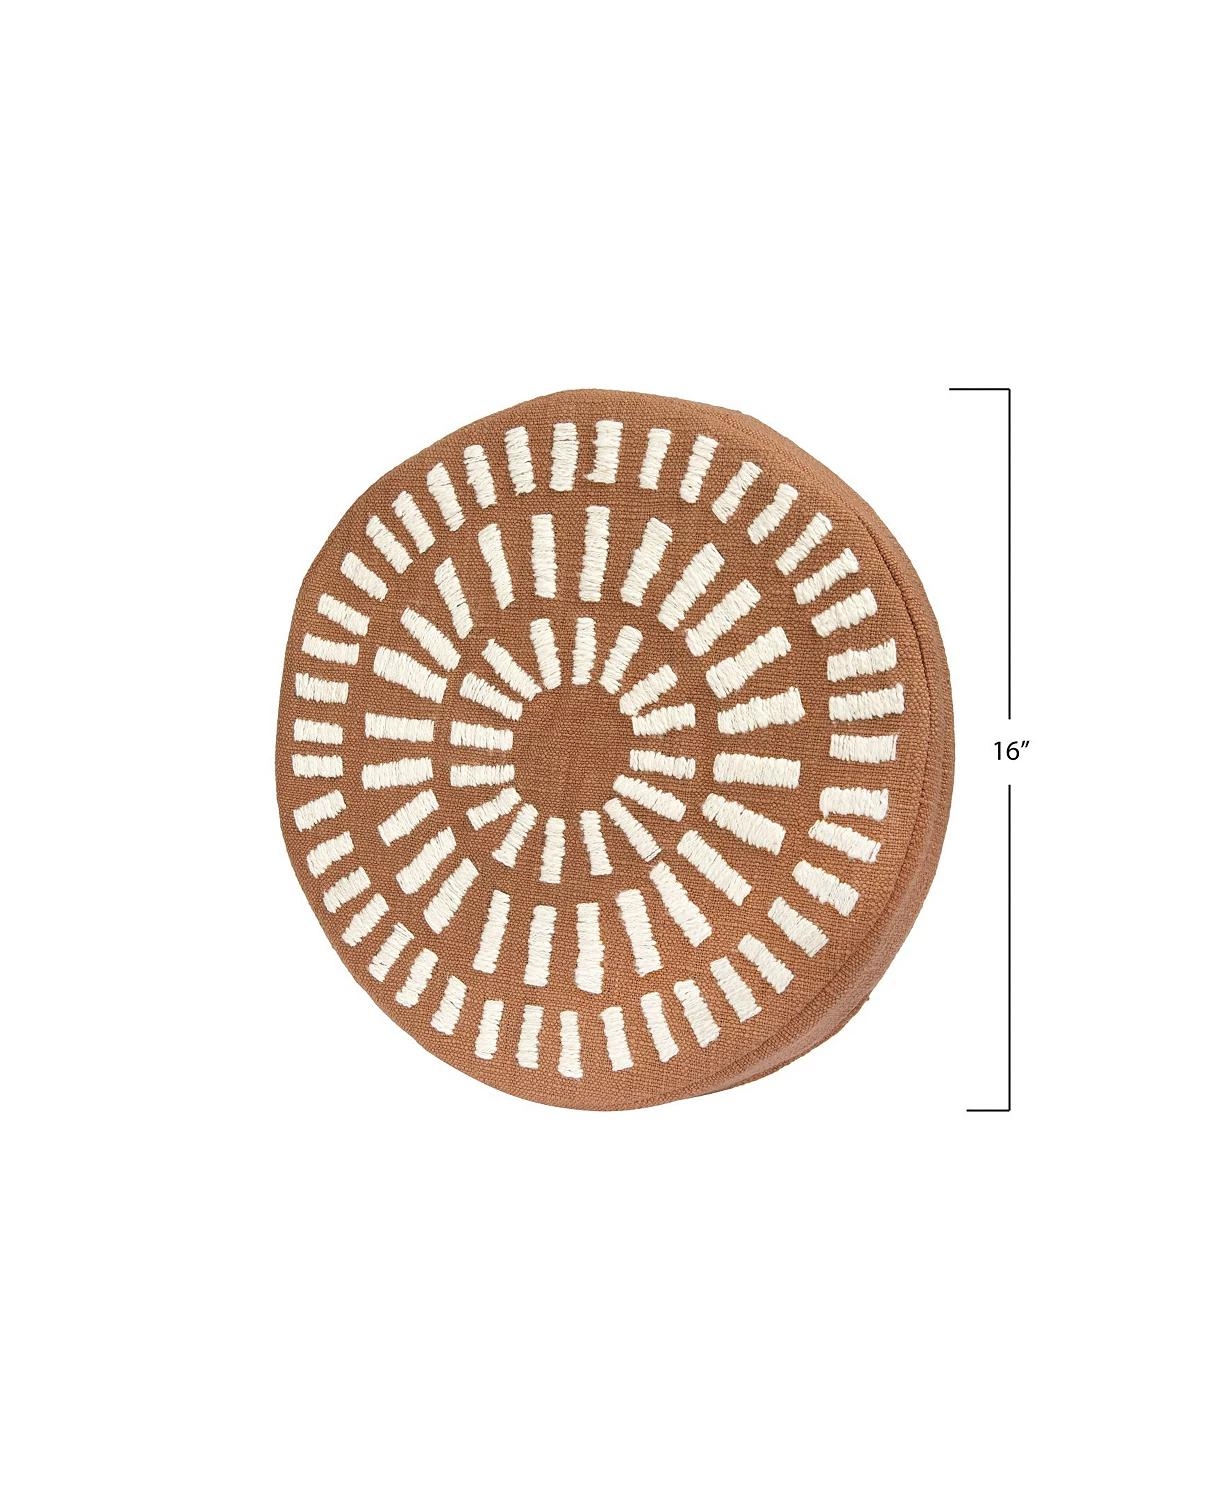 Disk Pillow with Raised Pattern, Burnt Orange & White Cotton, 16" x 16" - Image 2